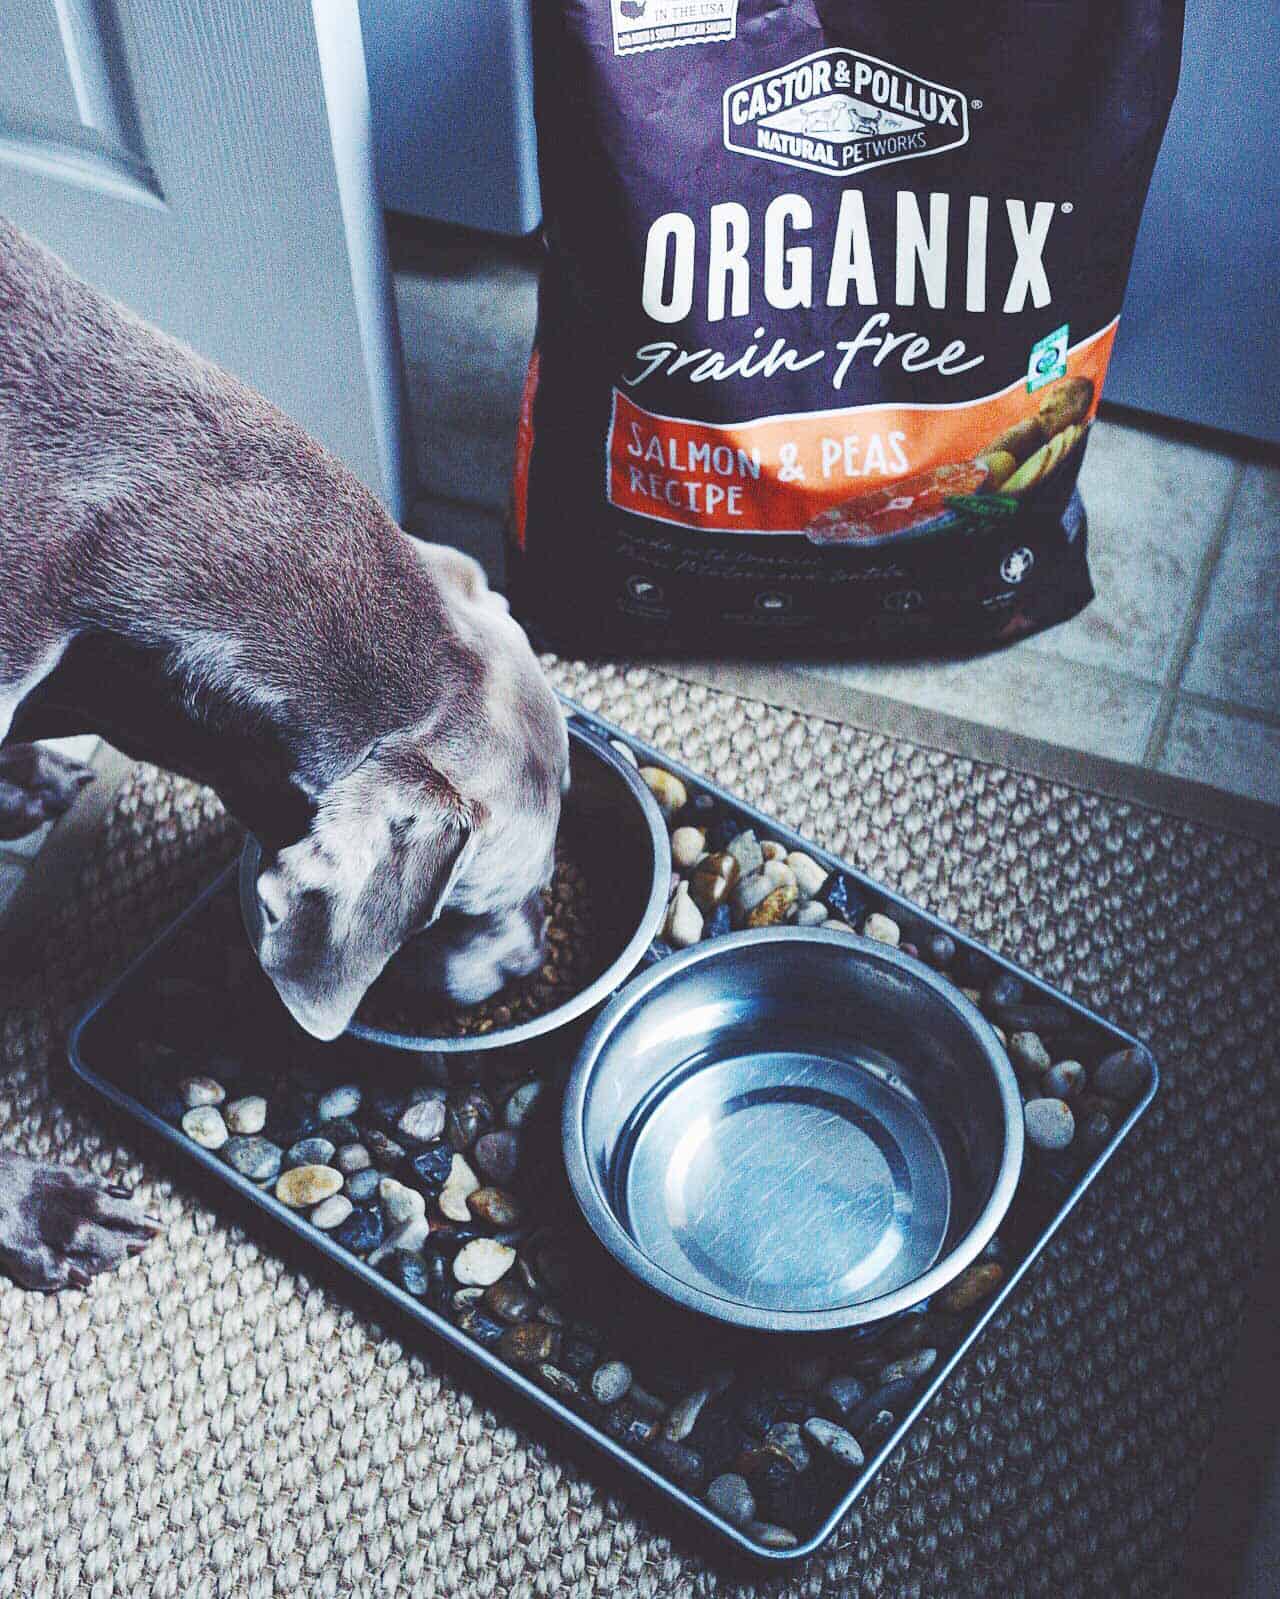 ORGANIX grain free salmon and peas recipe dog food